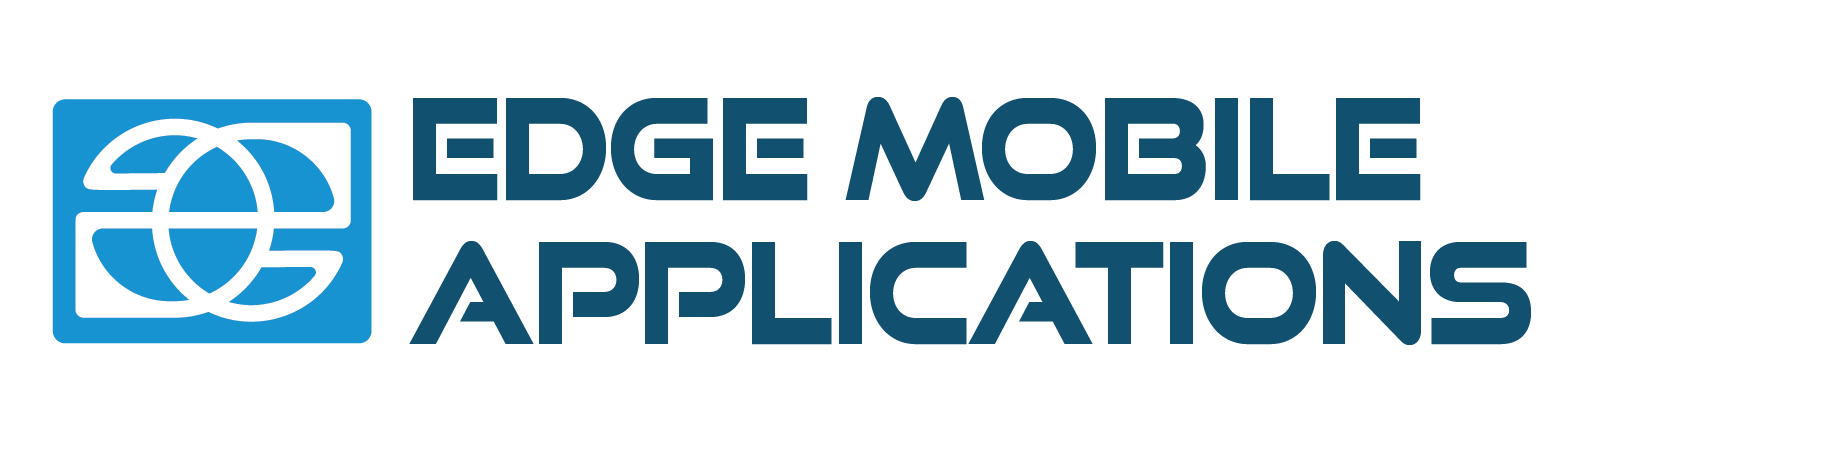 edge mobile application logo white